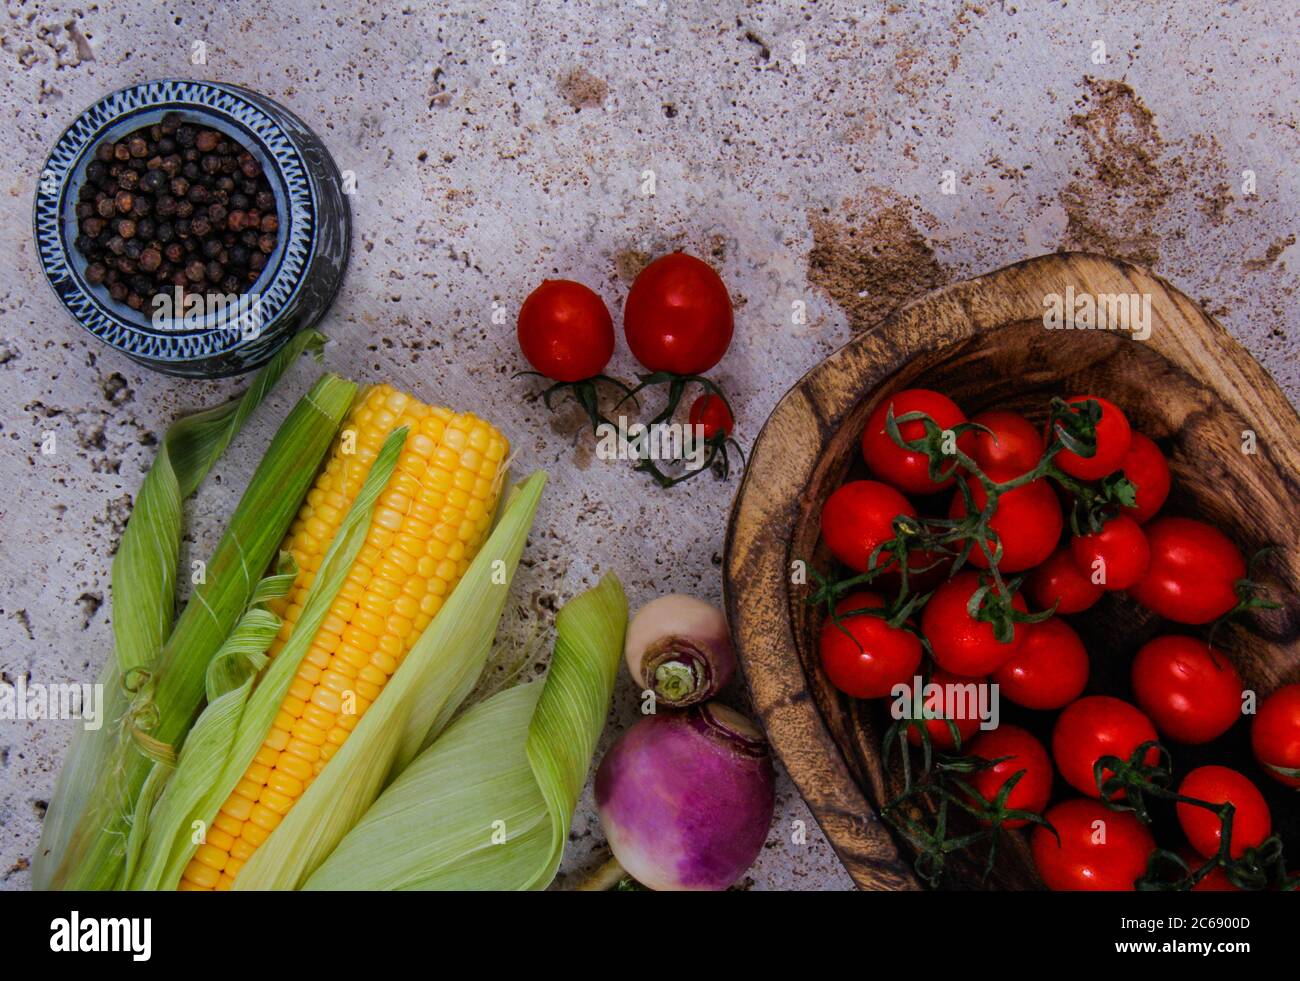 Tomatoes, turnips, corn, parsley and black pepper. Stock Photo